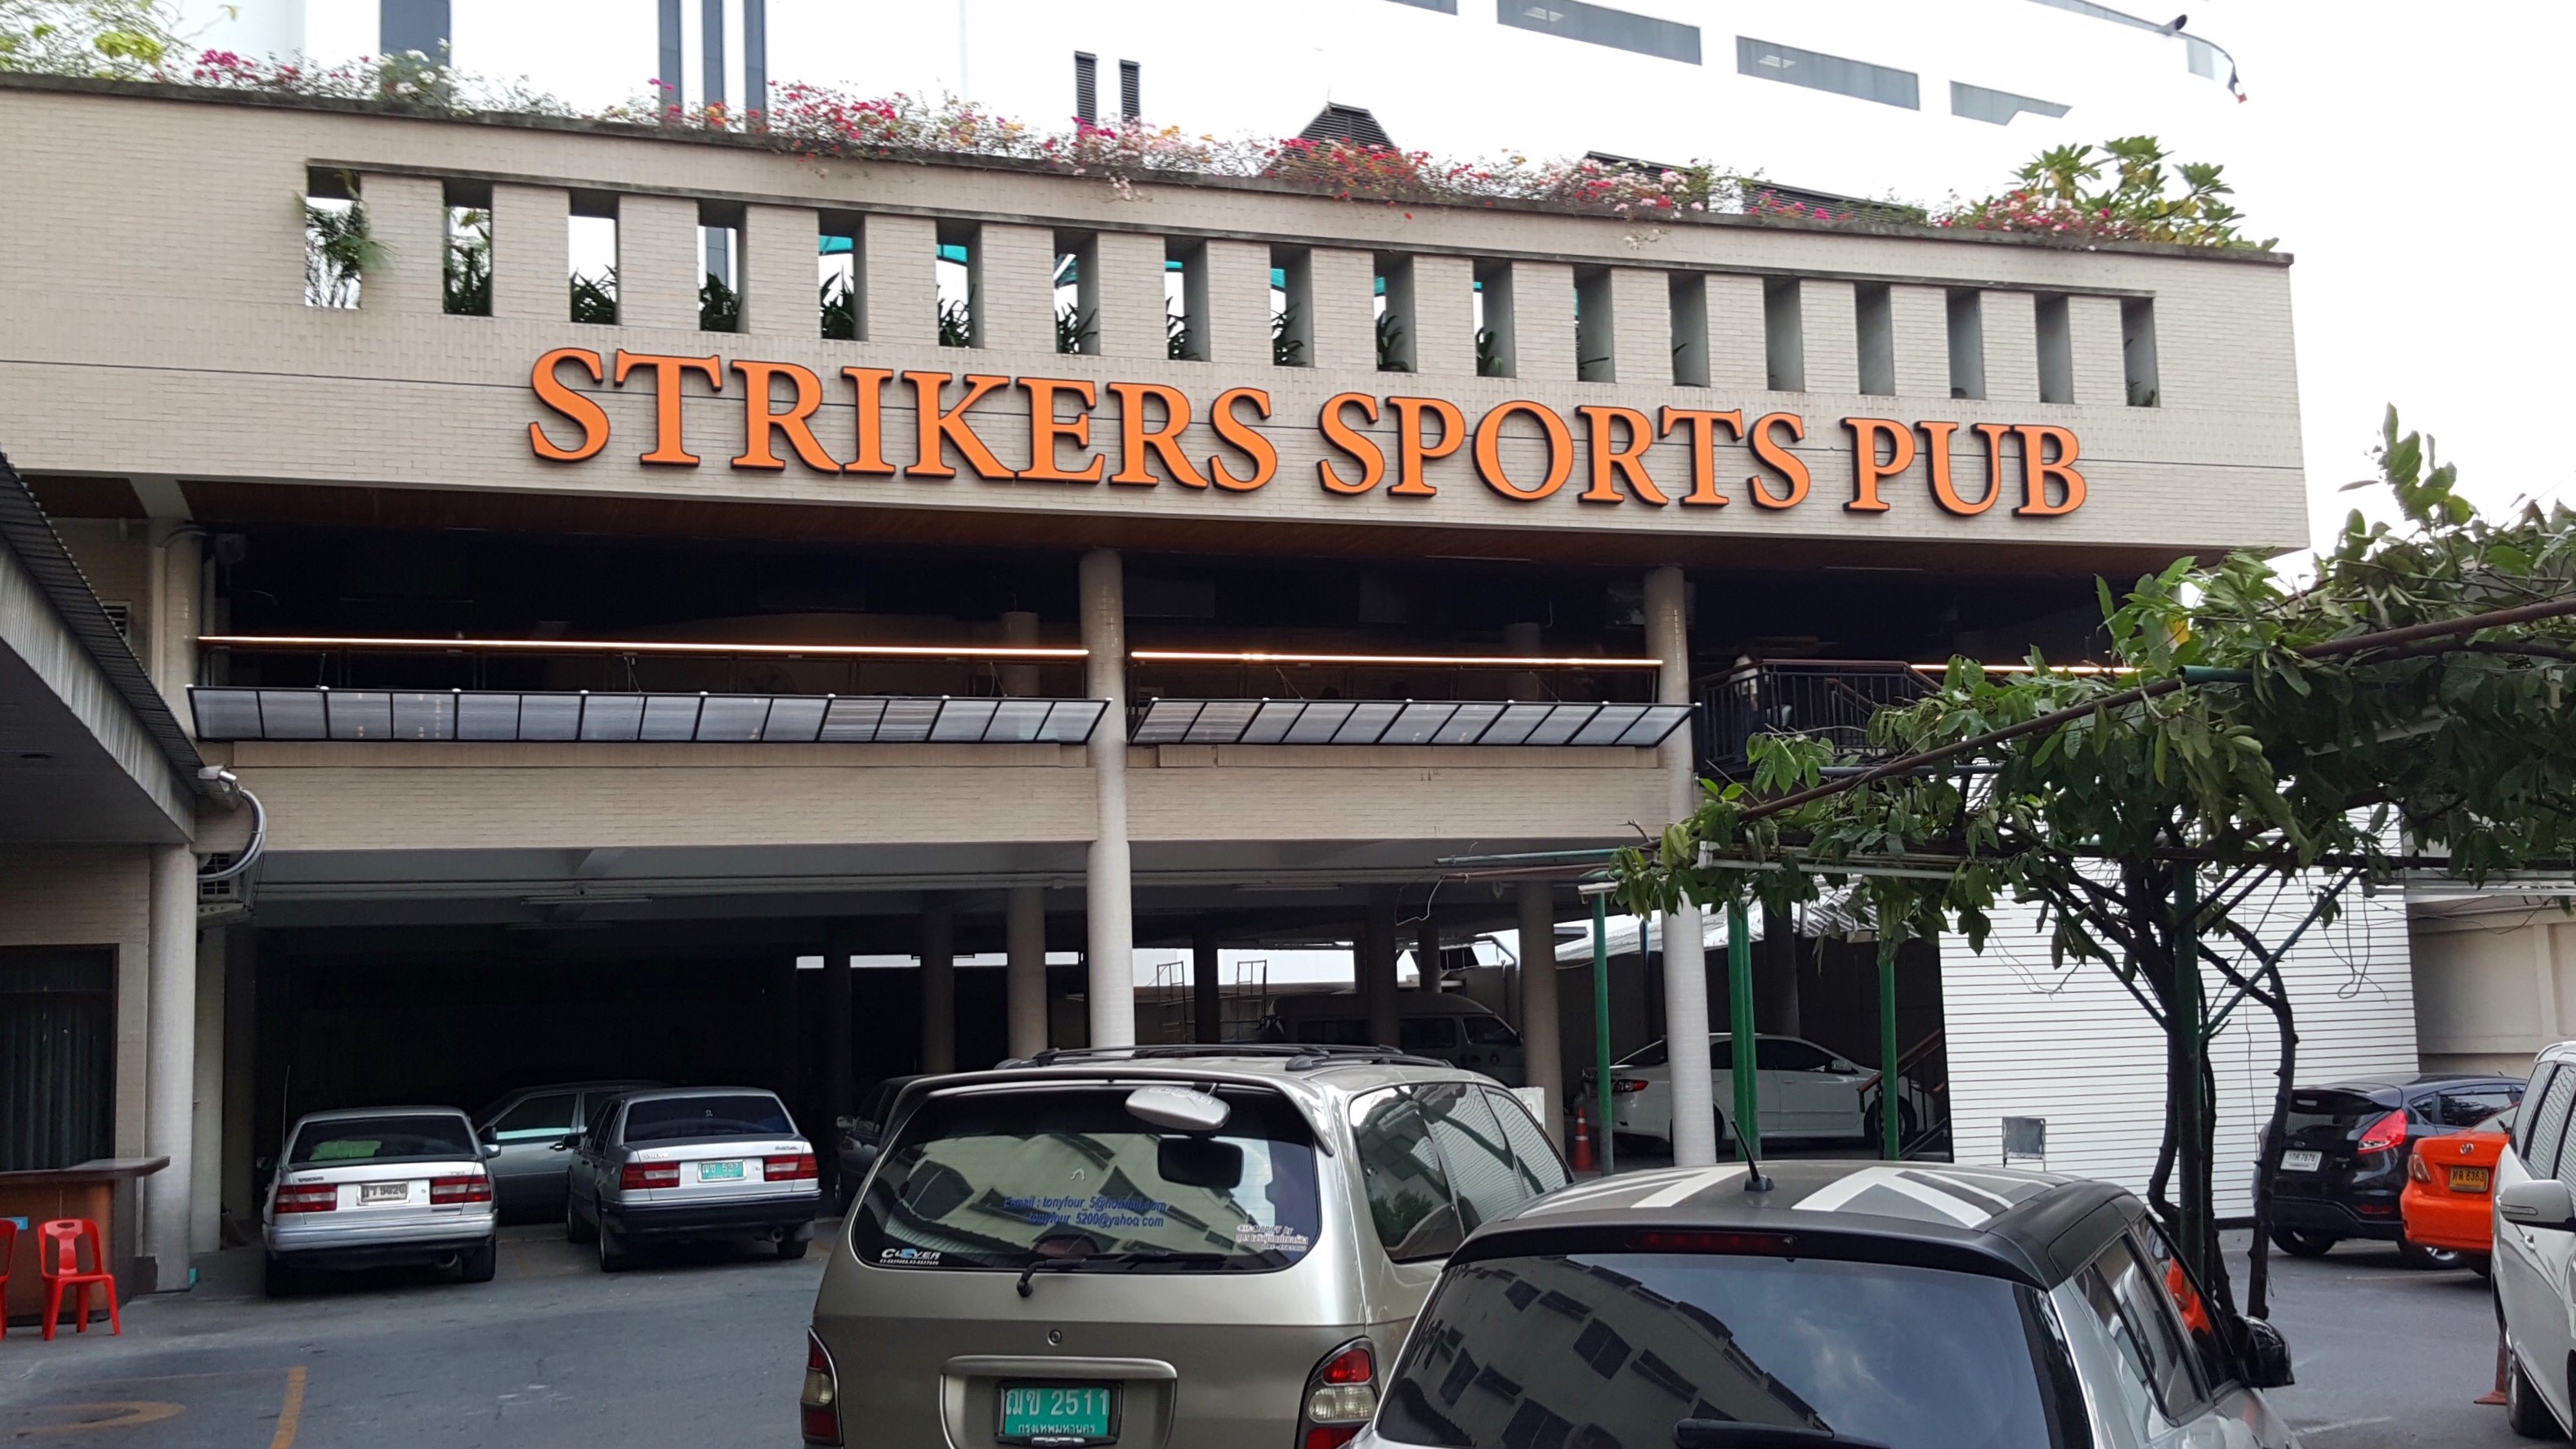 Strikers sports pub and restaurant